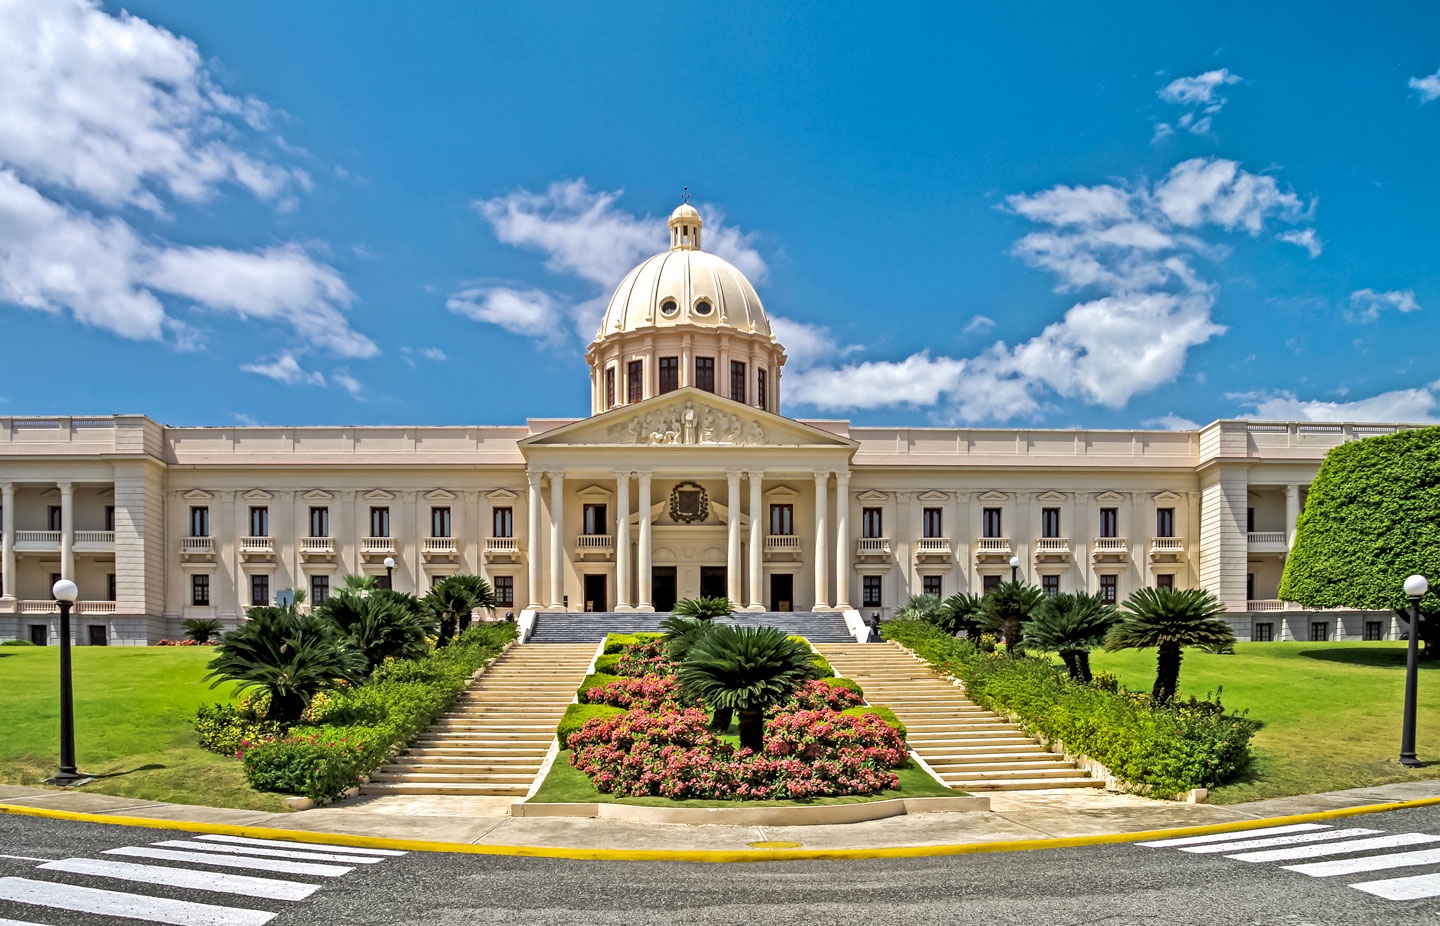 Palacio Nacional دفاتر رئیس جمهور و معاون رئیس جمهور دومینیکن را در خود جای داده است.